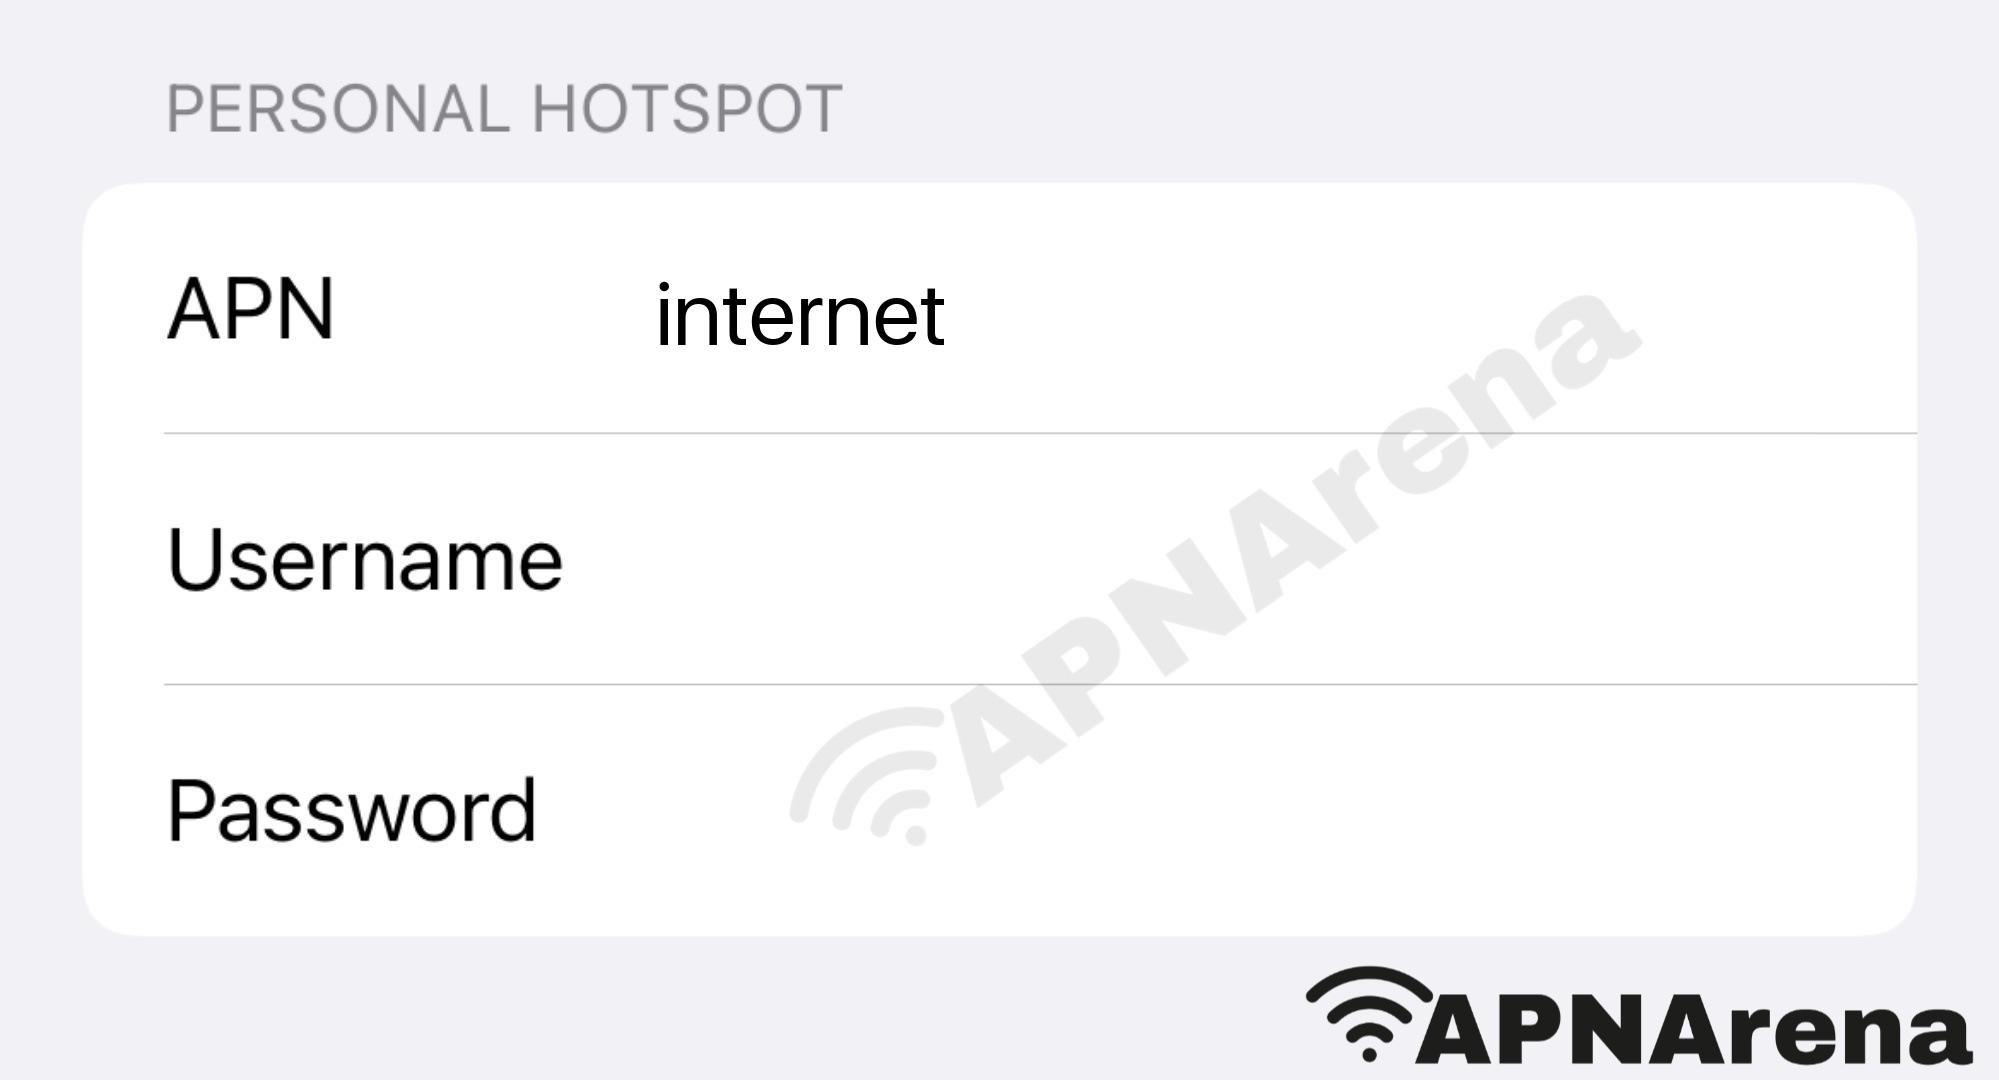 GoSmart Mobile Personal Hotspot Settings for iPhone